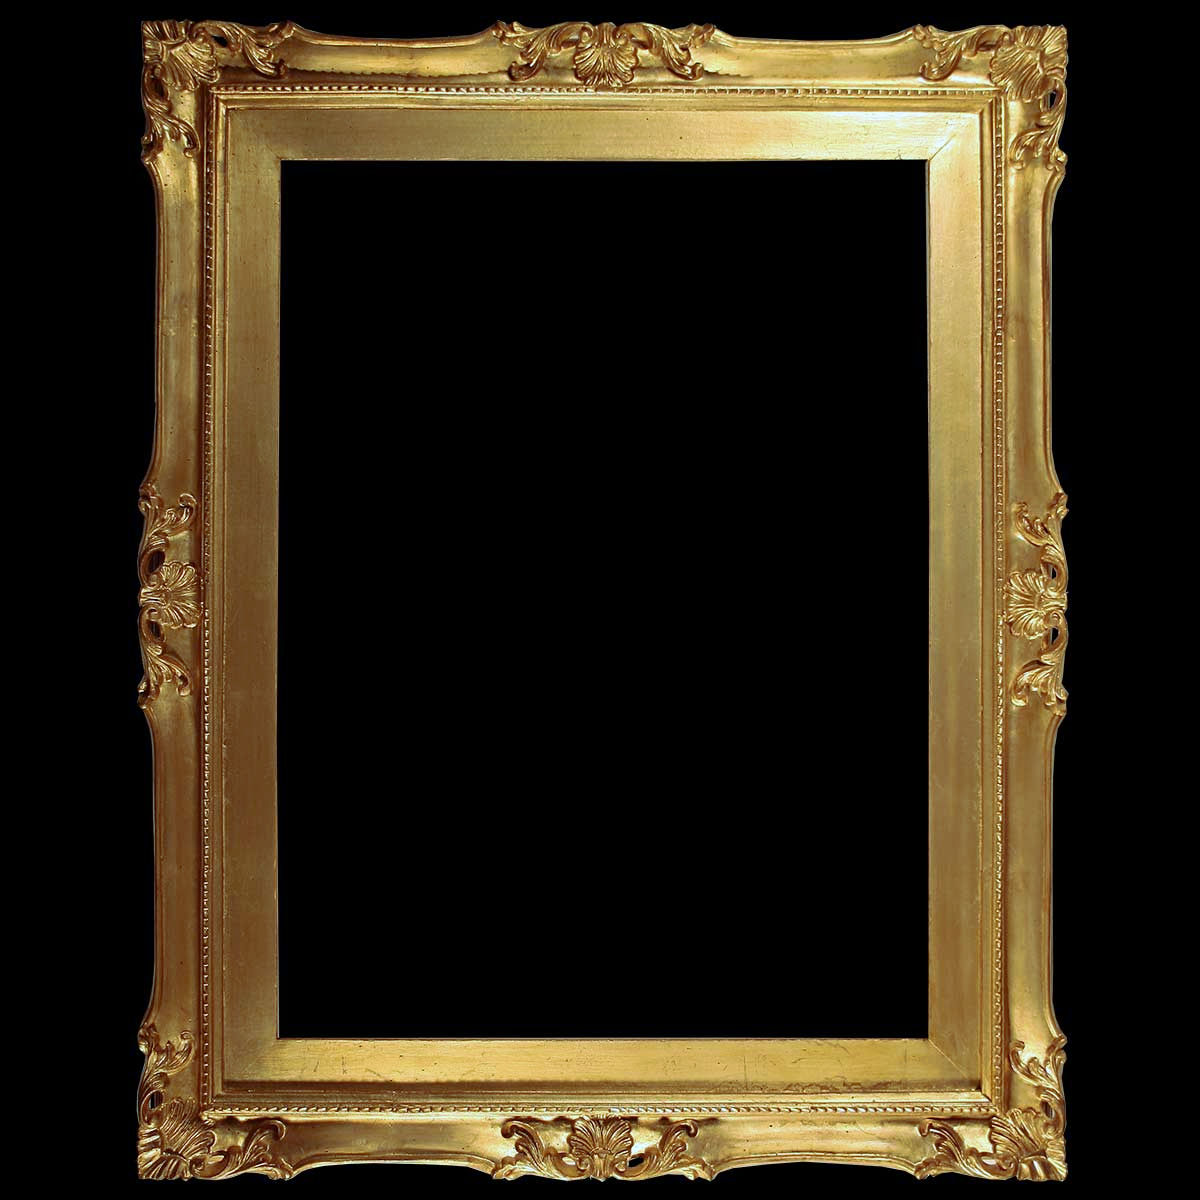 gold victorian frames